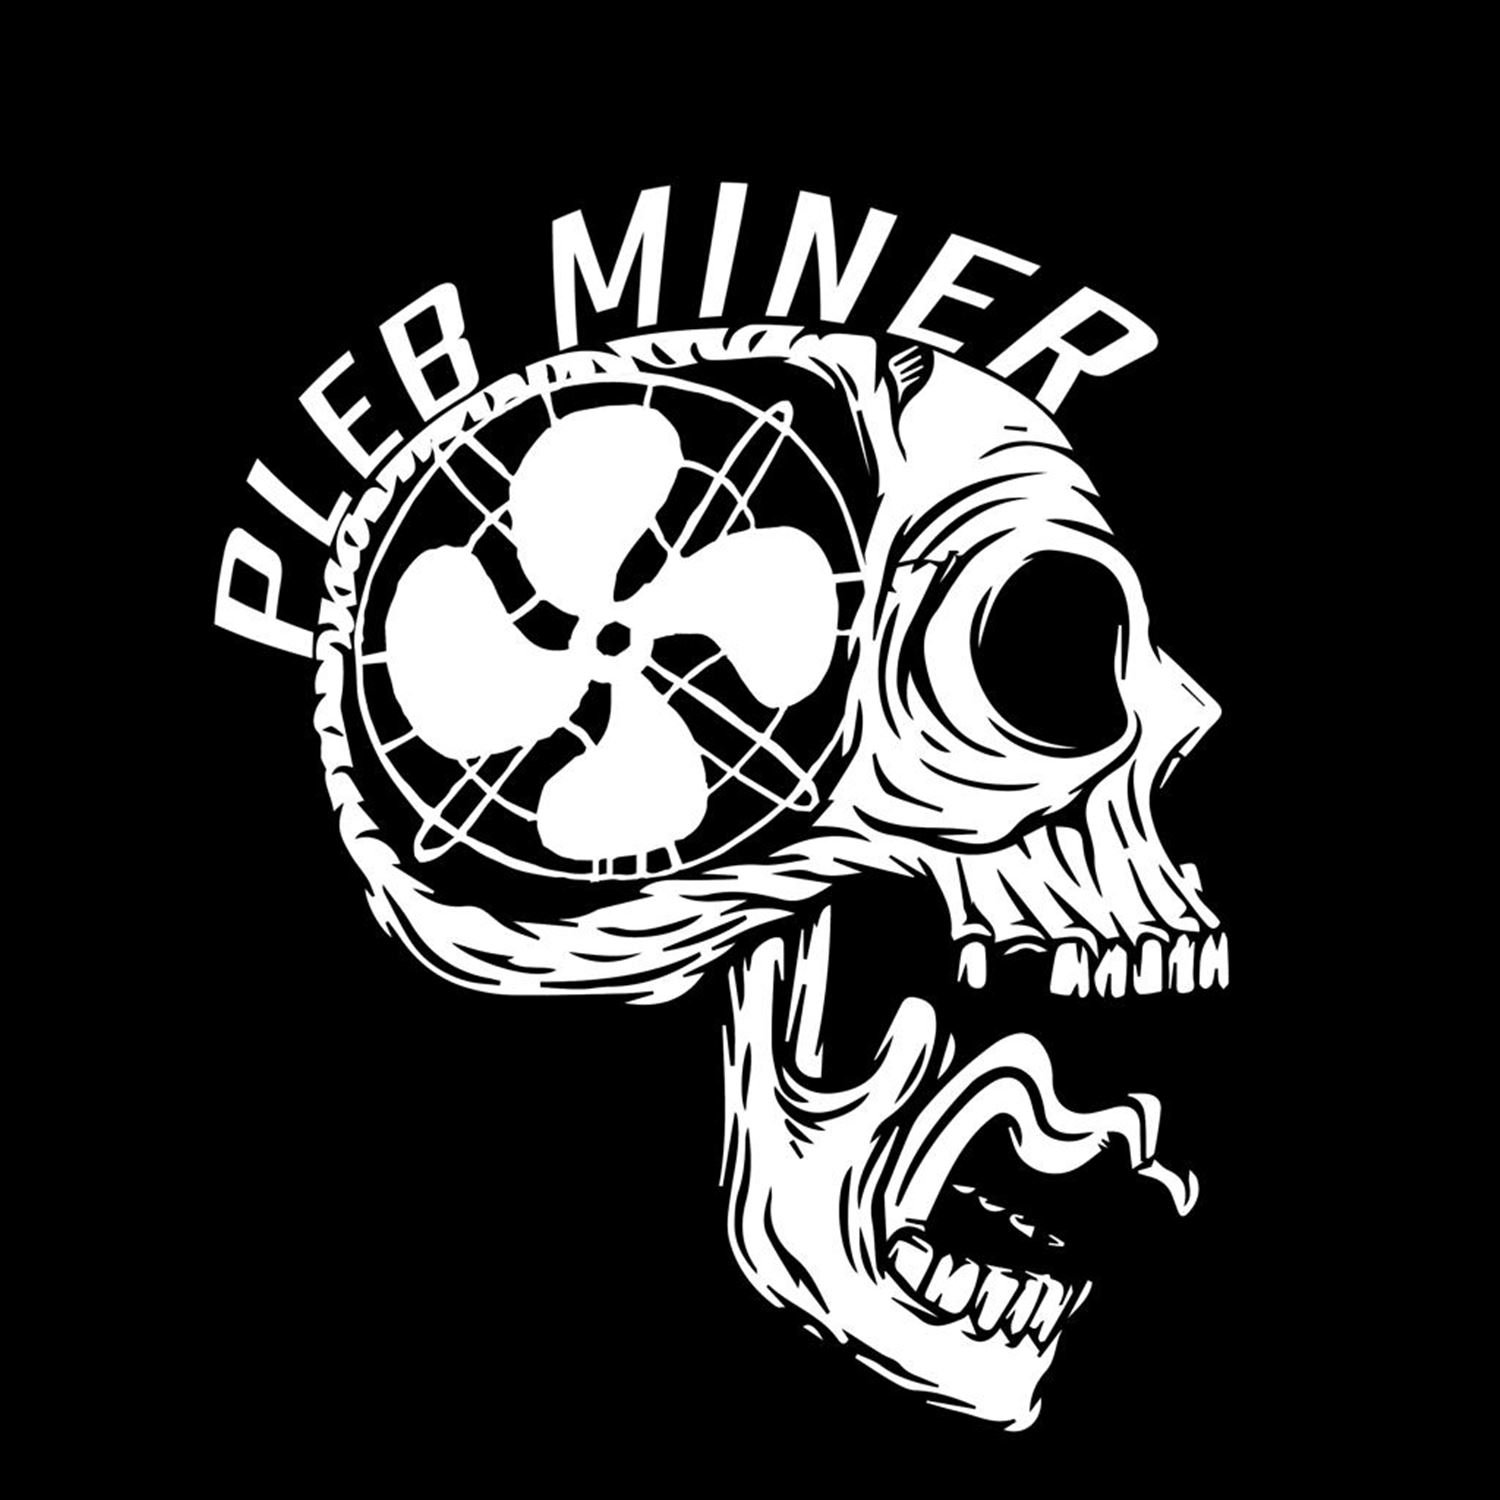 Pleb Miner Month Finale